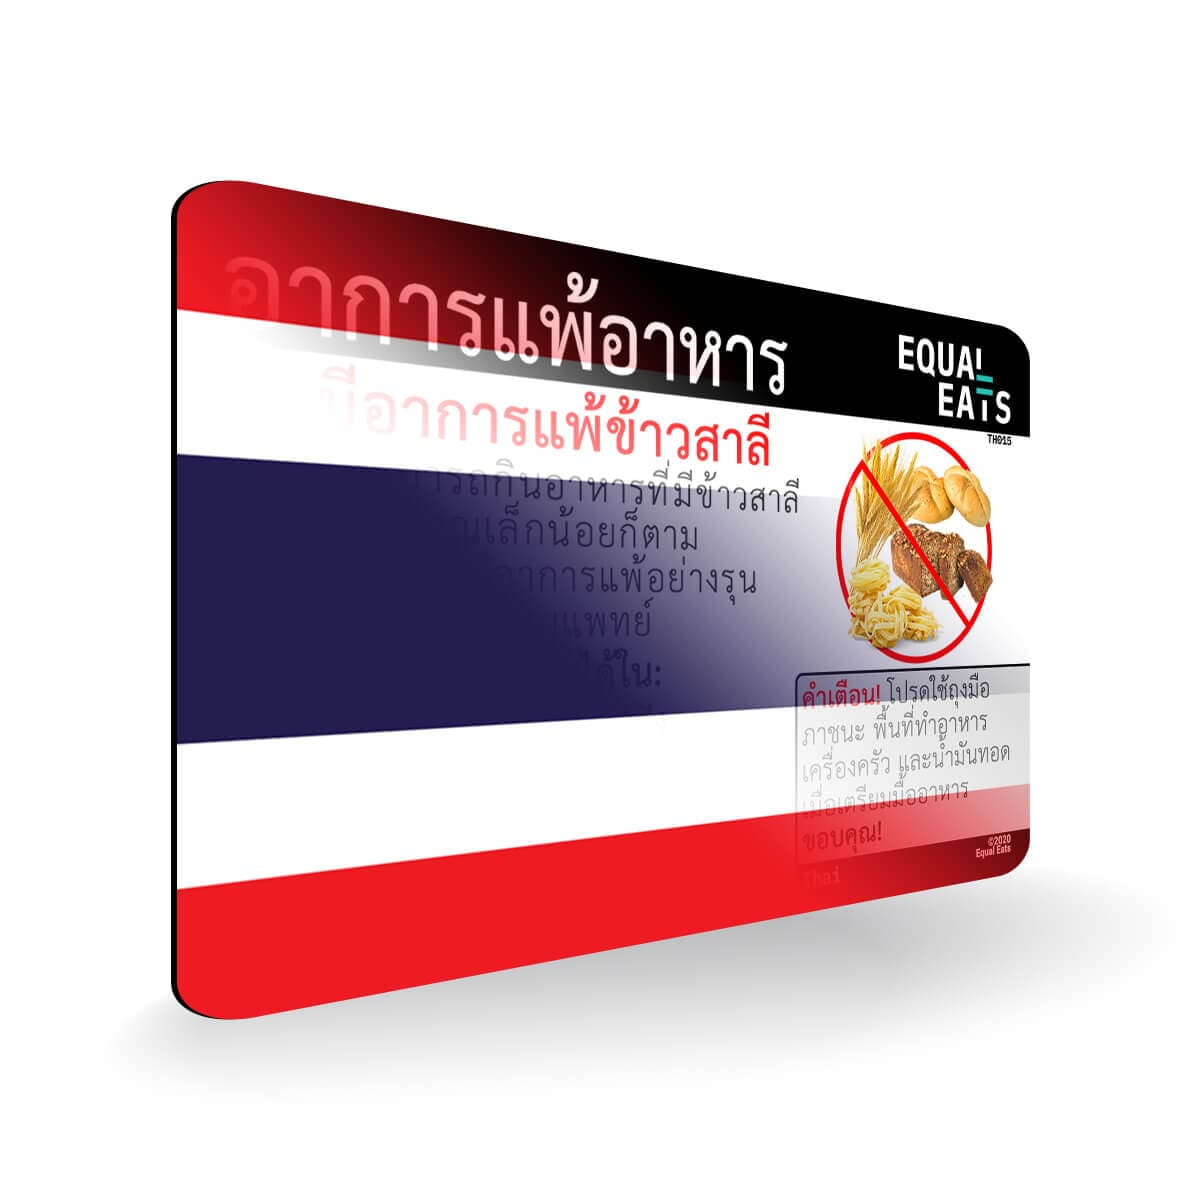 Wheat Allergy in Thai. Wheat Allergy Card for Thailand